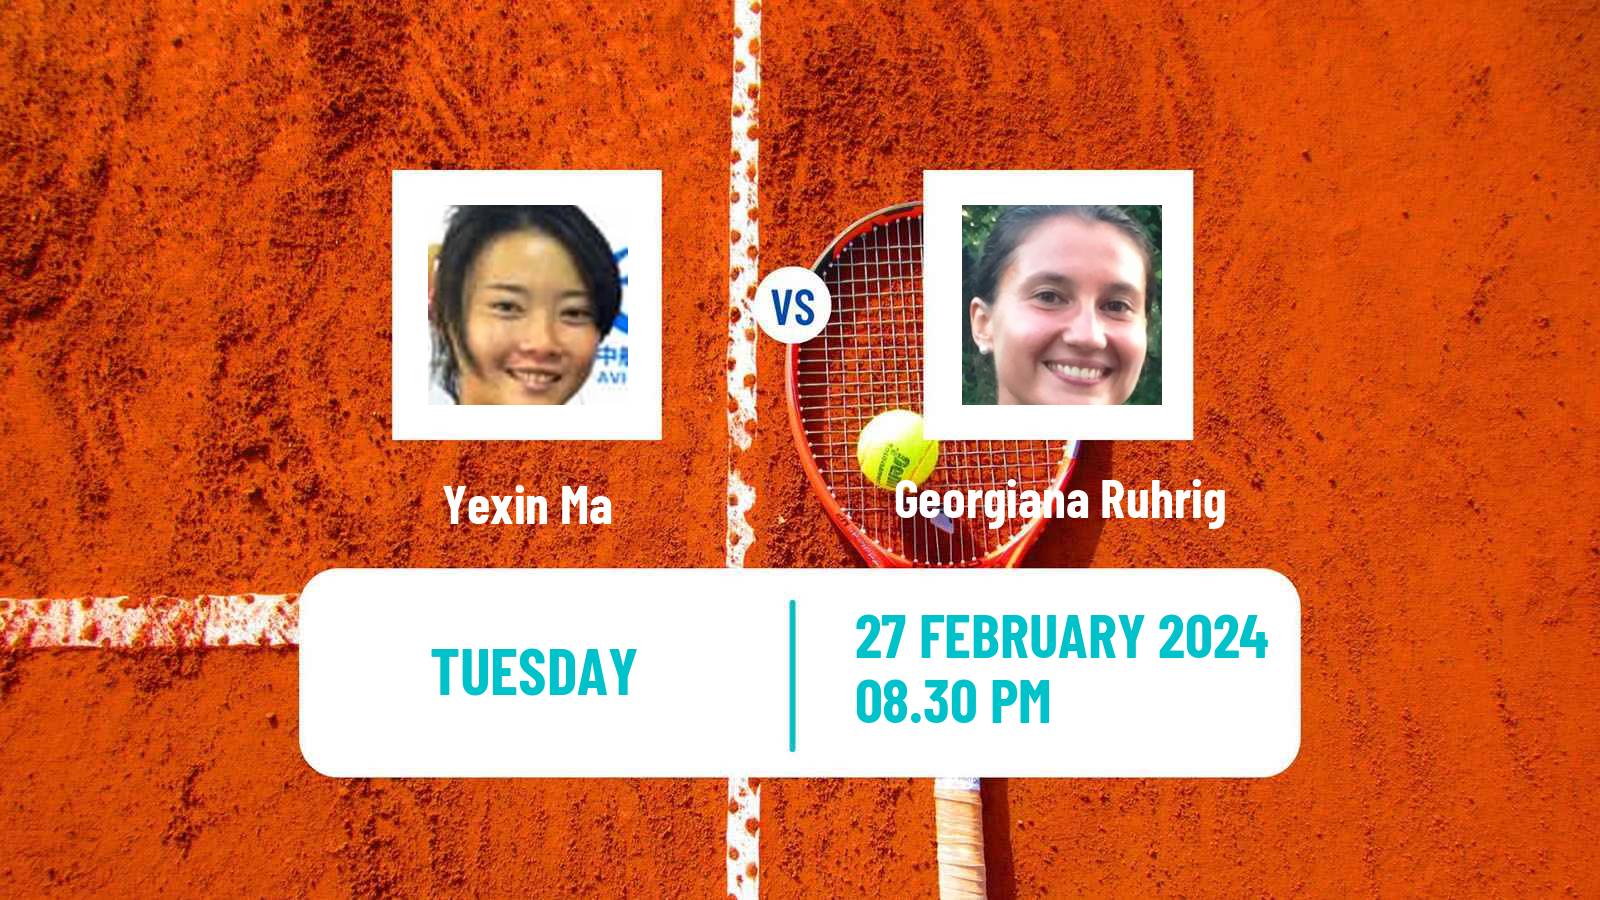 Tennis ITF W35 Traralgon 2 Women Yexin Ma - Georgiana Ruhrig